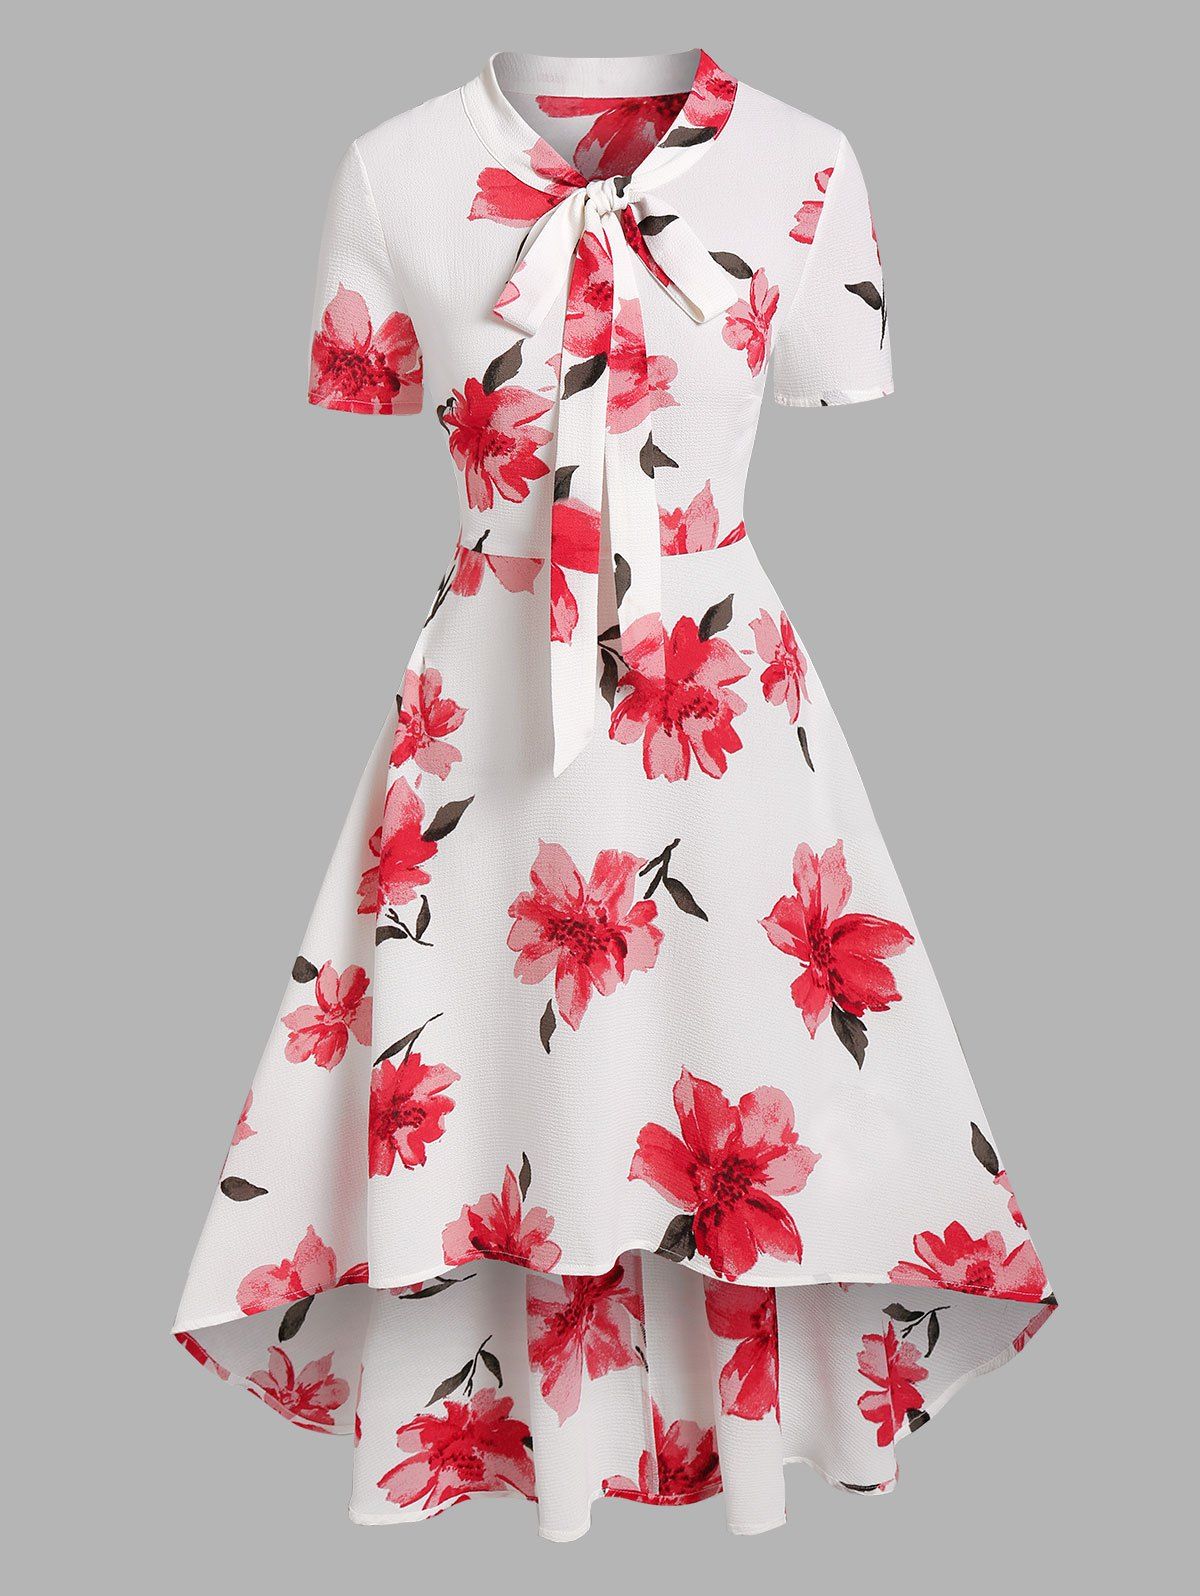 Romantic Allover Flower Print Summer High Low Bowknot Midi Dress - WHITE XL